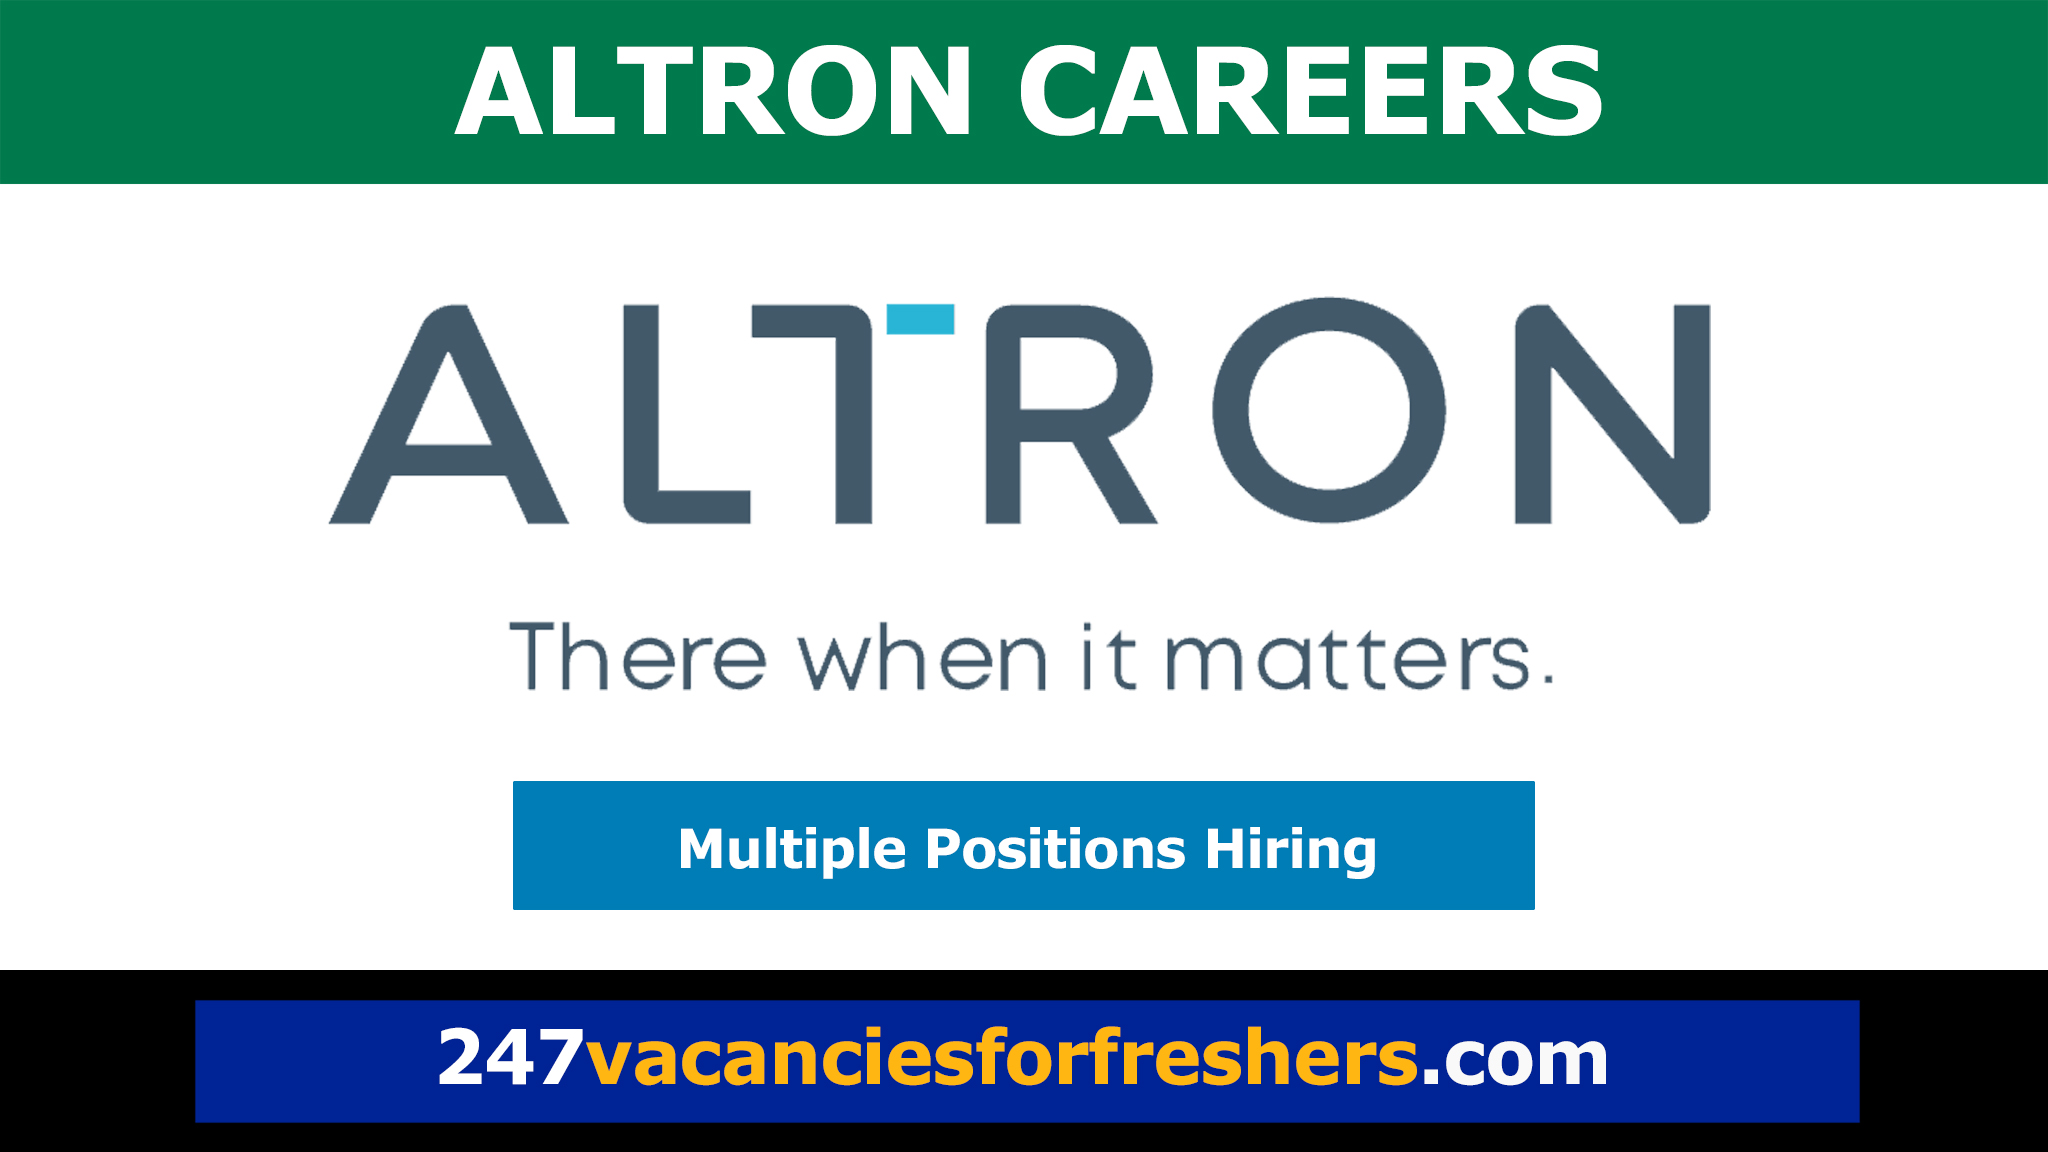 Altron Careers